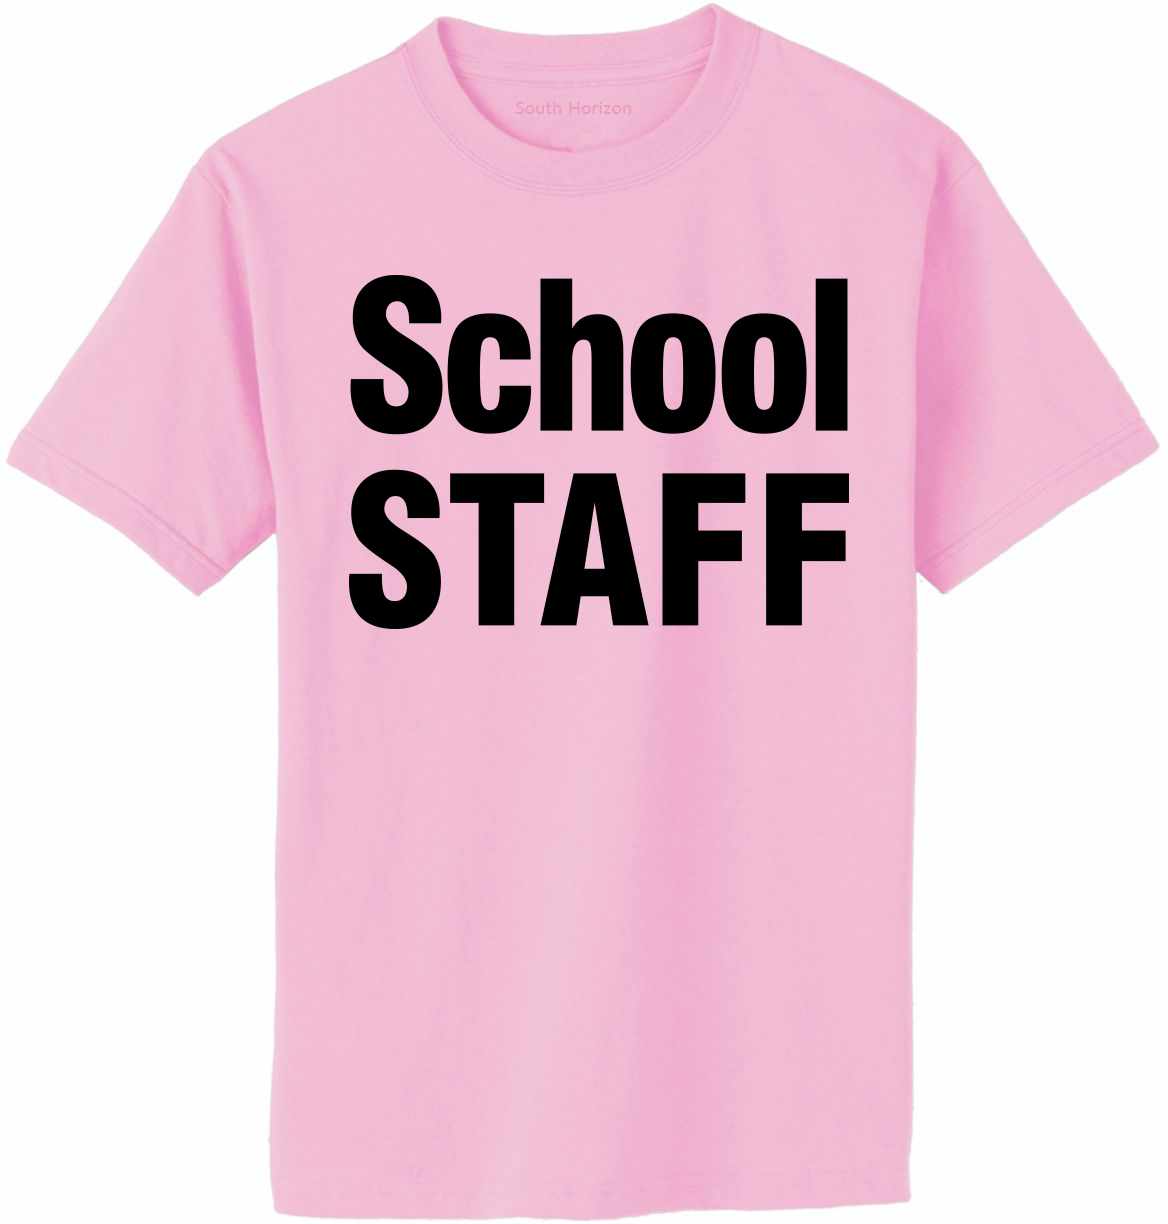 School STAFF on Adult T-Shirt (#1388-1)